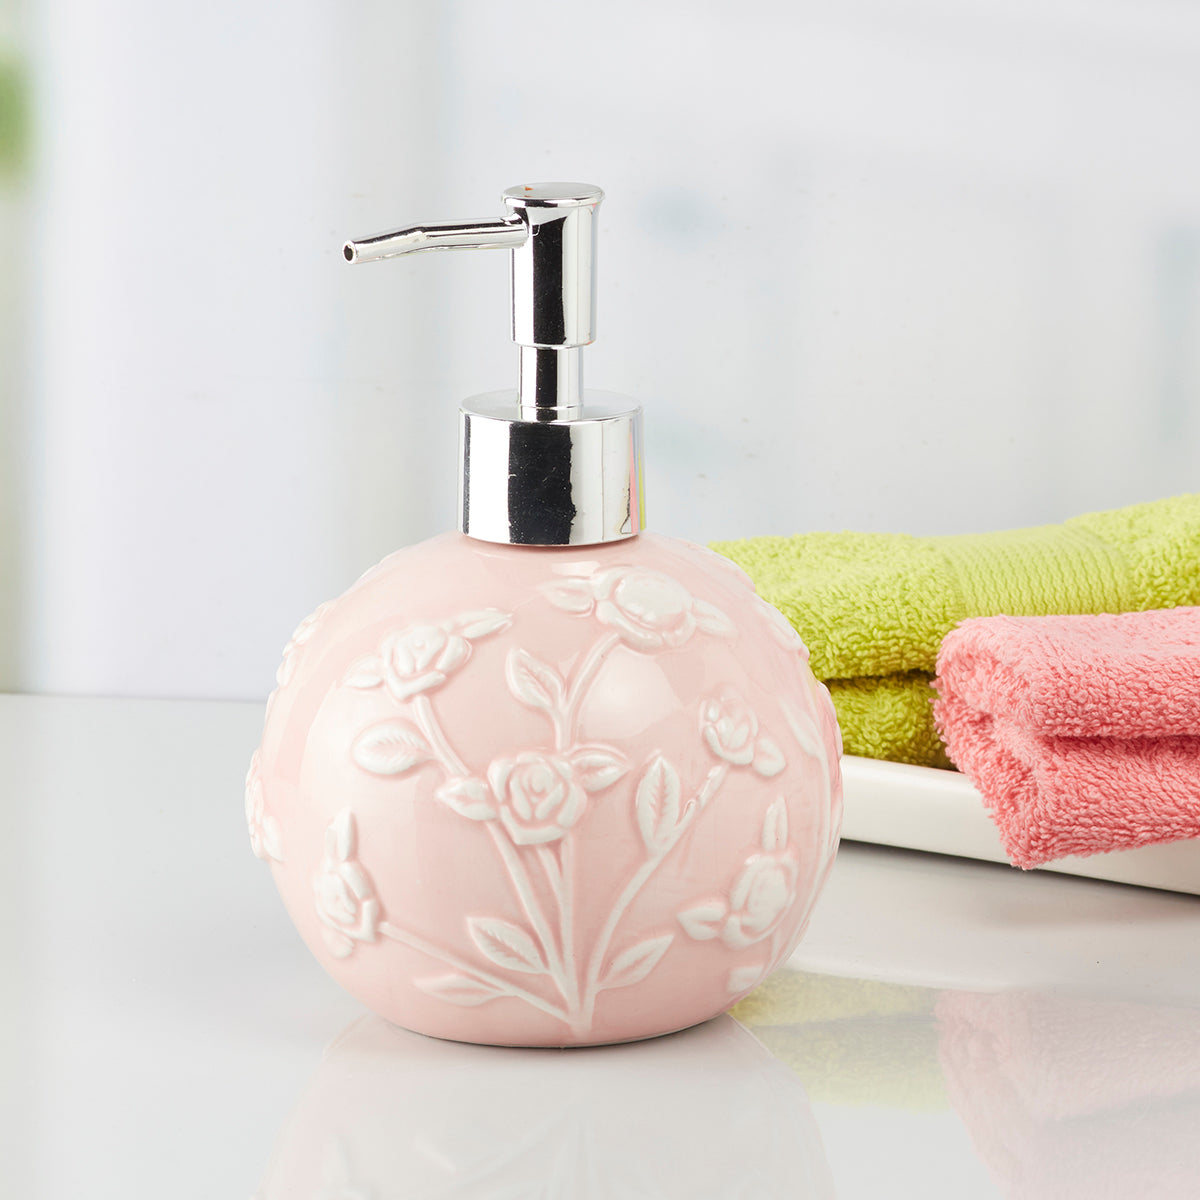 Ceramic Soap Dispenser Pump for Bathroom for Bath Gel, Lotion, Shampoo (8017)